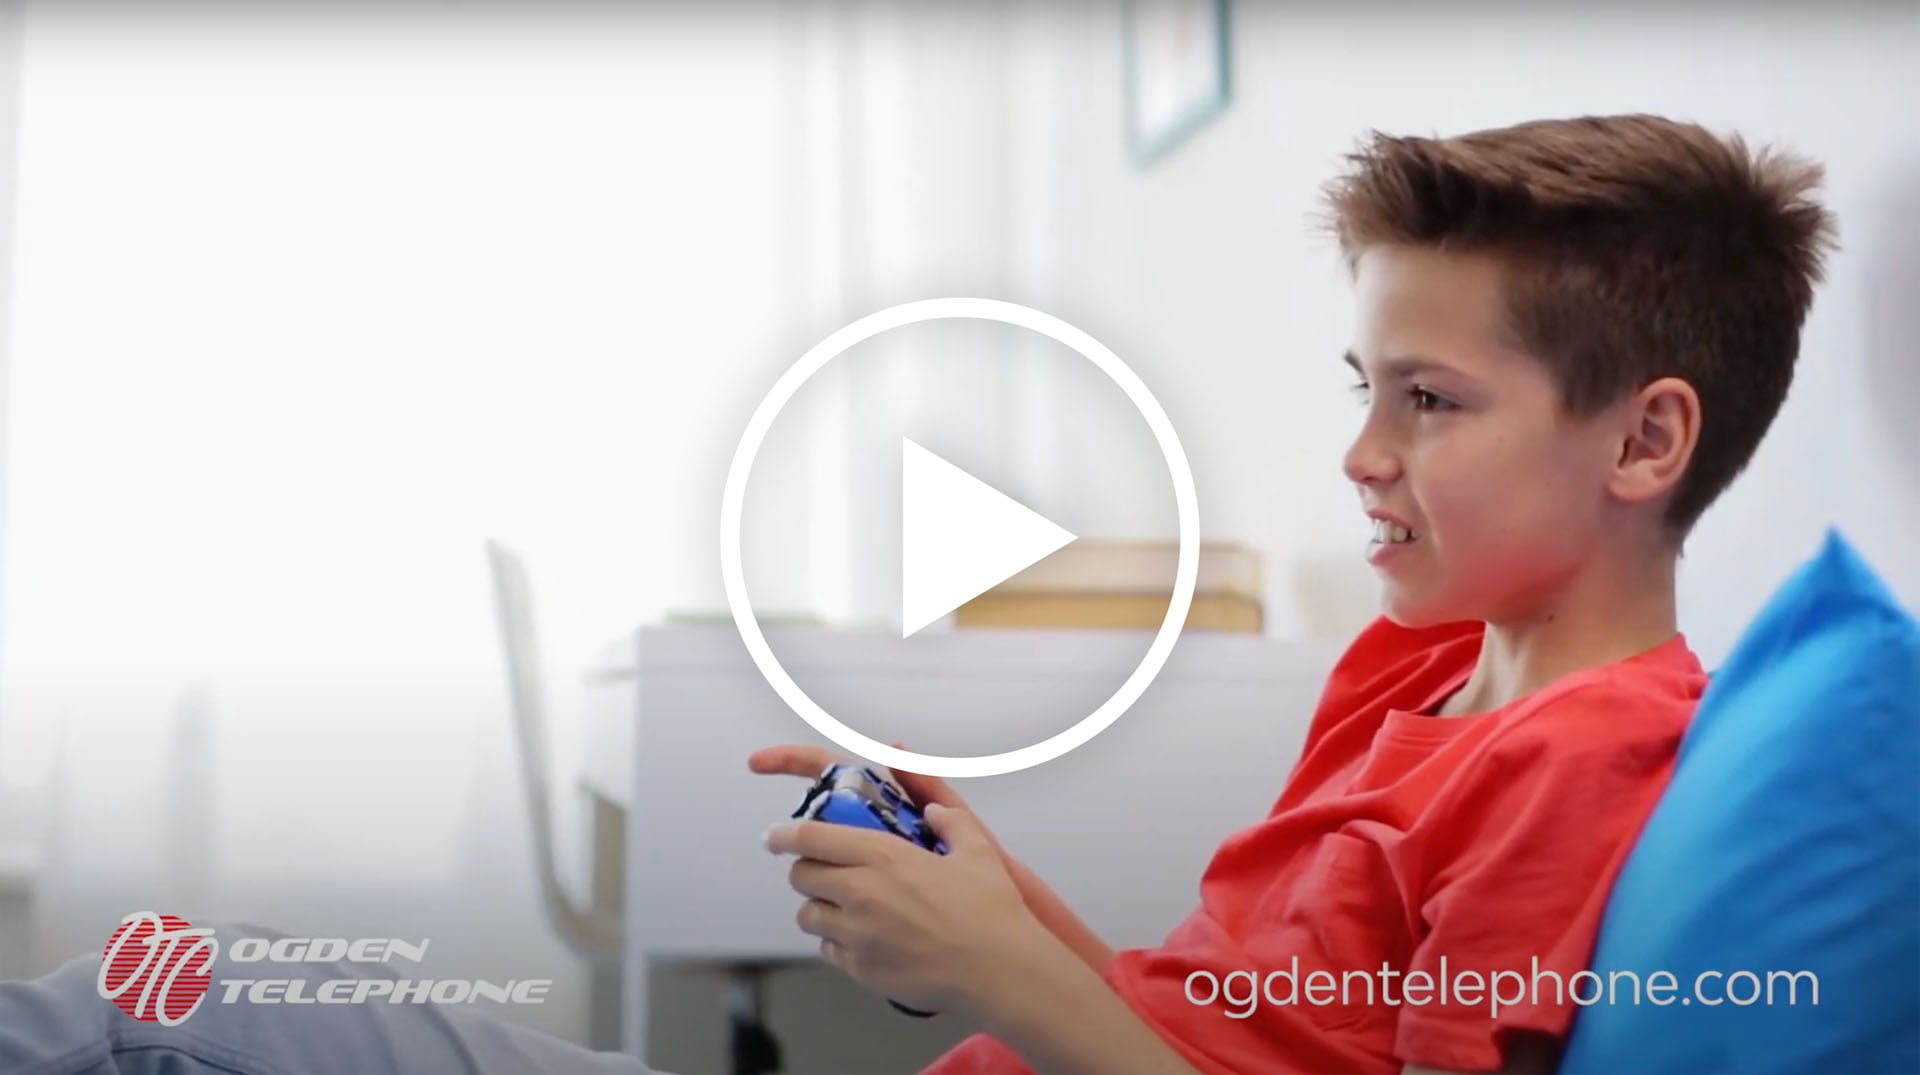 Young boy playing video games using Ogden's fiberoptic internet service